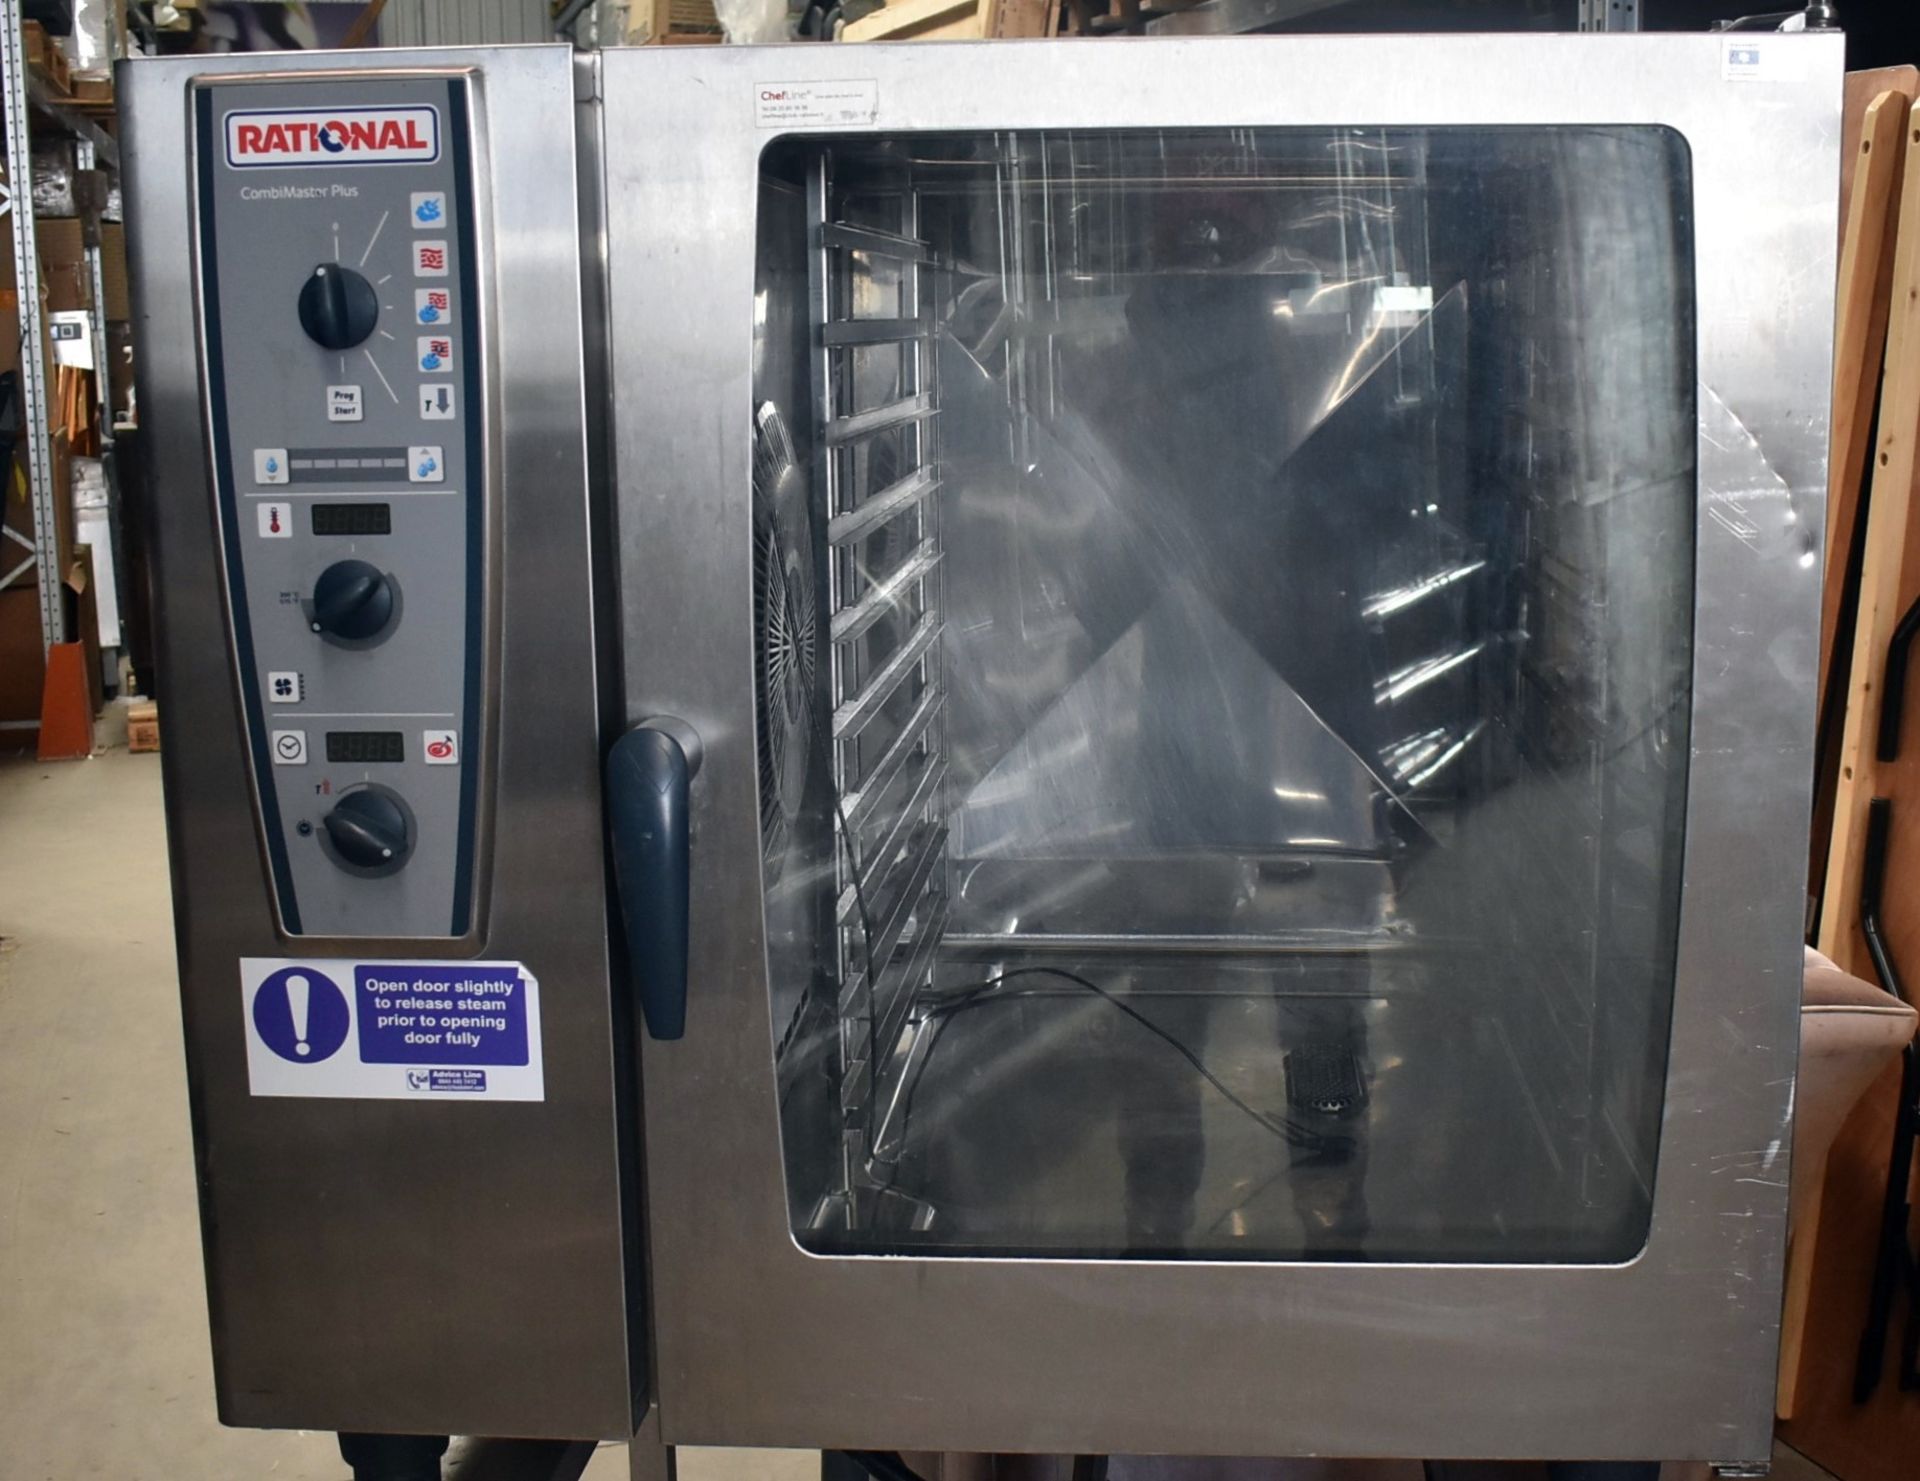 1 x Rational CombiMaster Plus 10 Grid Combi Oven - Type: CMP 102 - 3 Phase